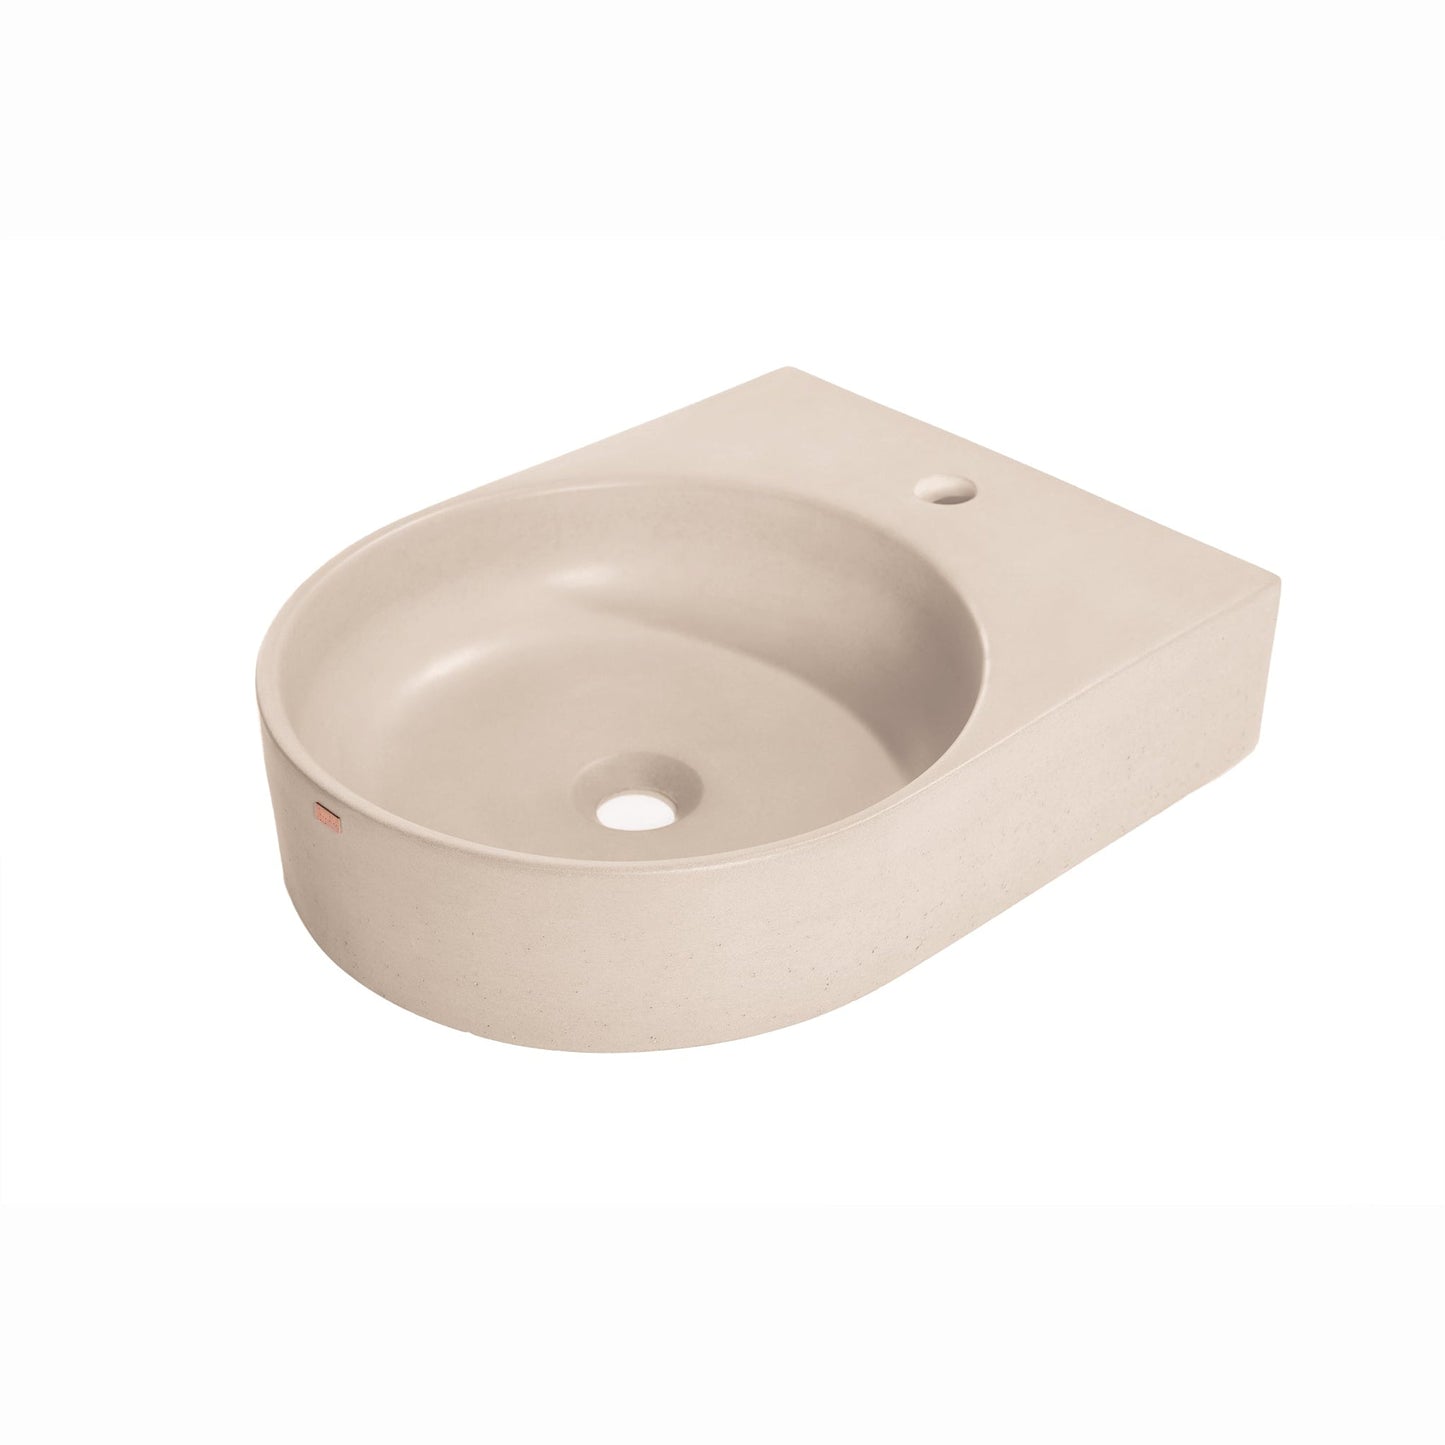 Konkretus Bahia01 15" Linen Beige Wall-Mounted Round Vessel Concrete Bathroom Sink